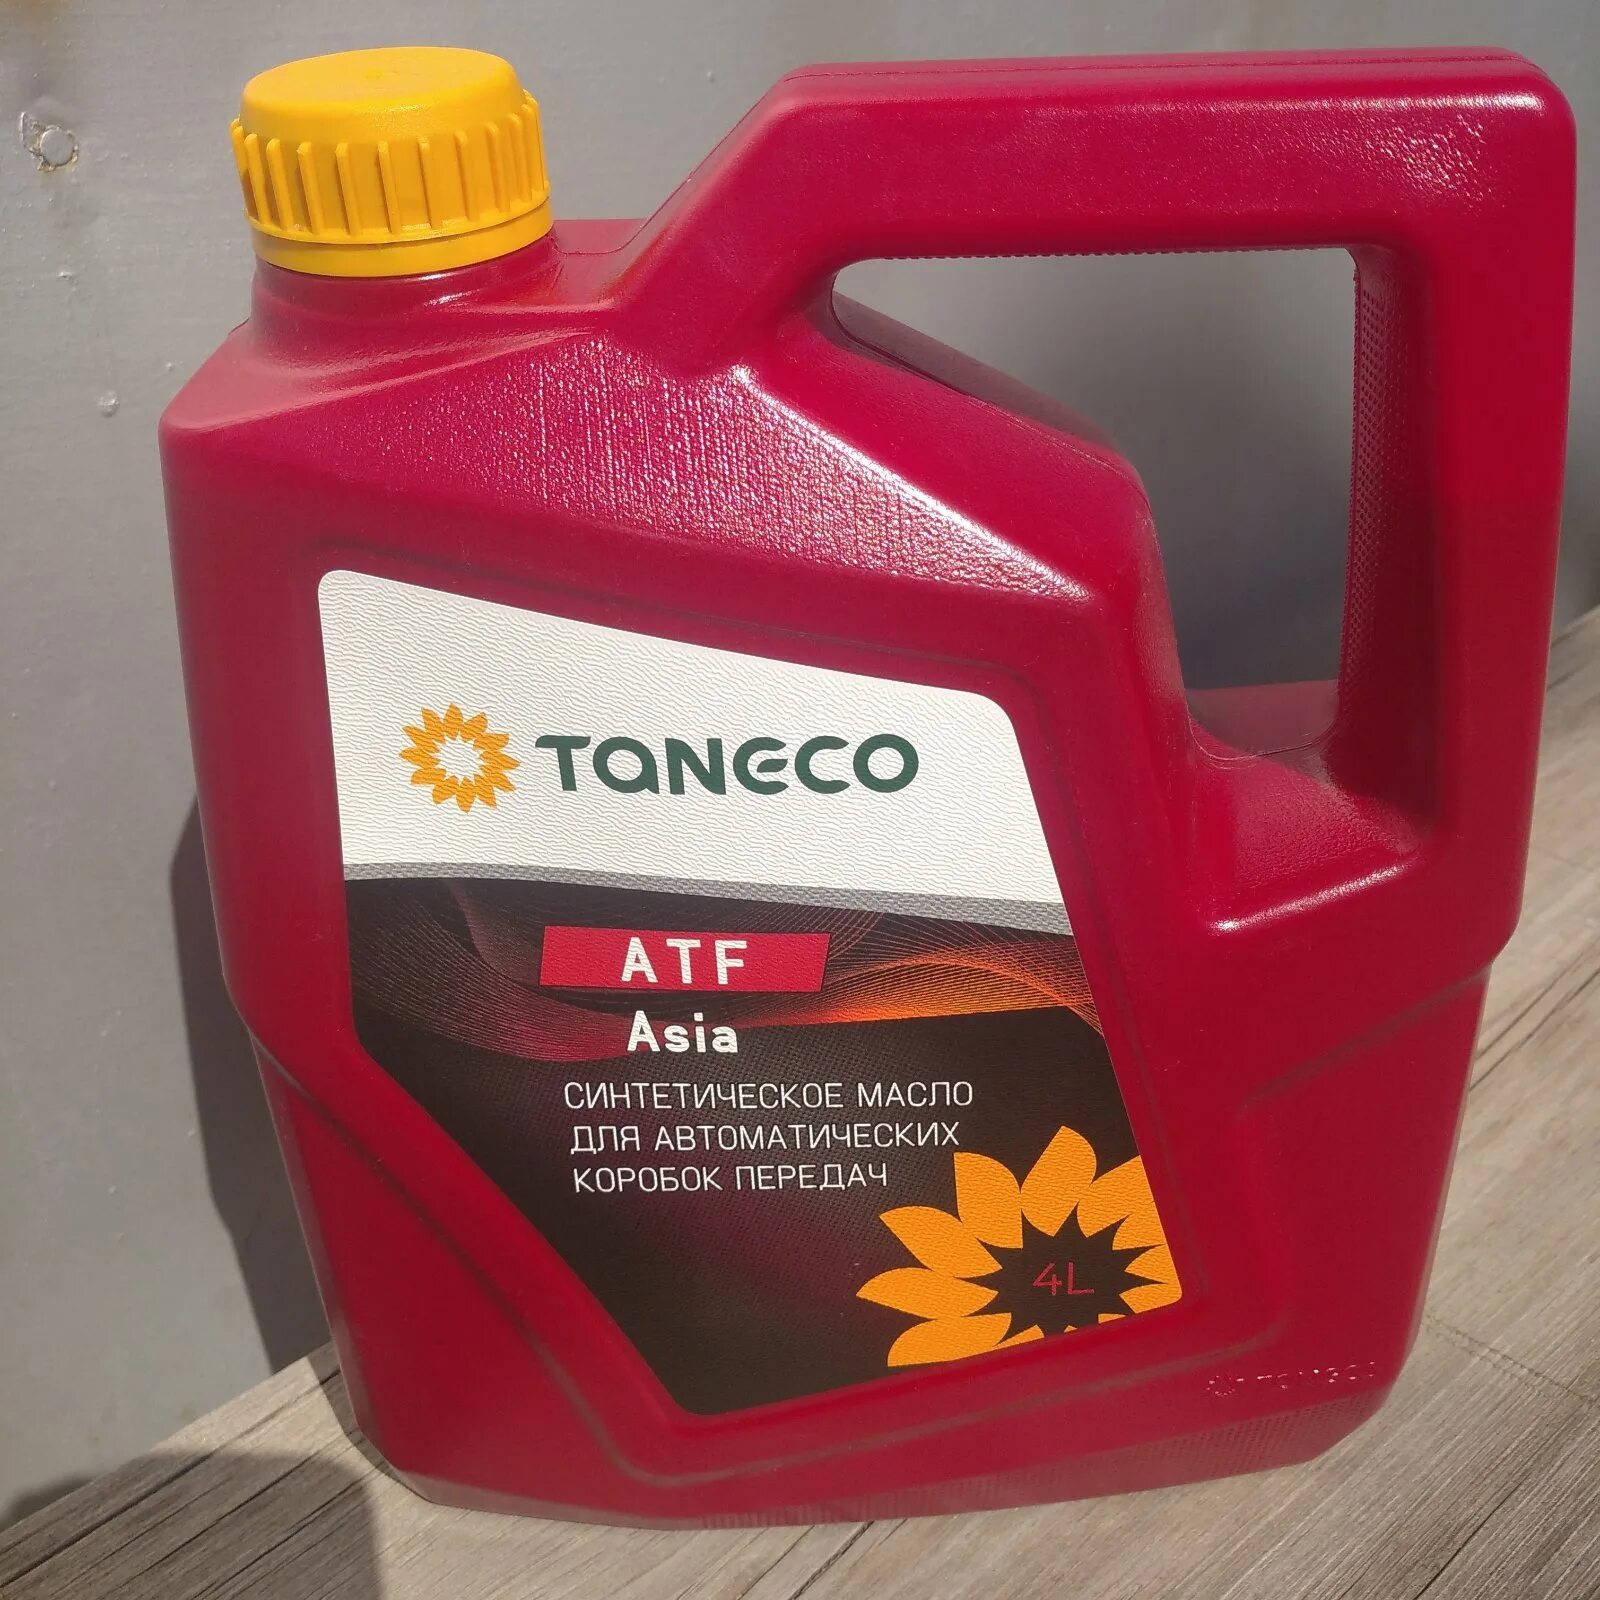 Трансмиссионное масло форум. Taneco ATF. Taneco ATF Asia. ТАНЕКО трансмиссионное масло. Масло трансмиссионное для автоматических коробок передач "Taneco ATF Plus".